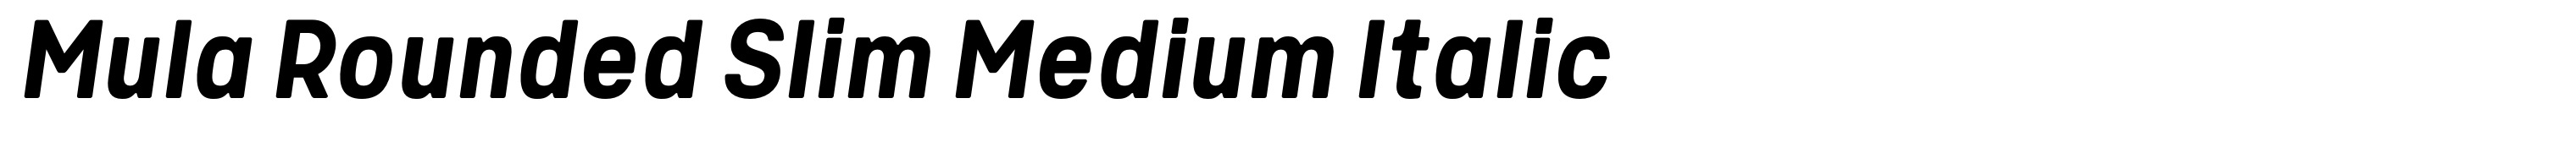 Mula Rounded Slim Medium Italic